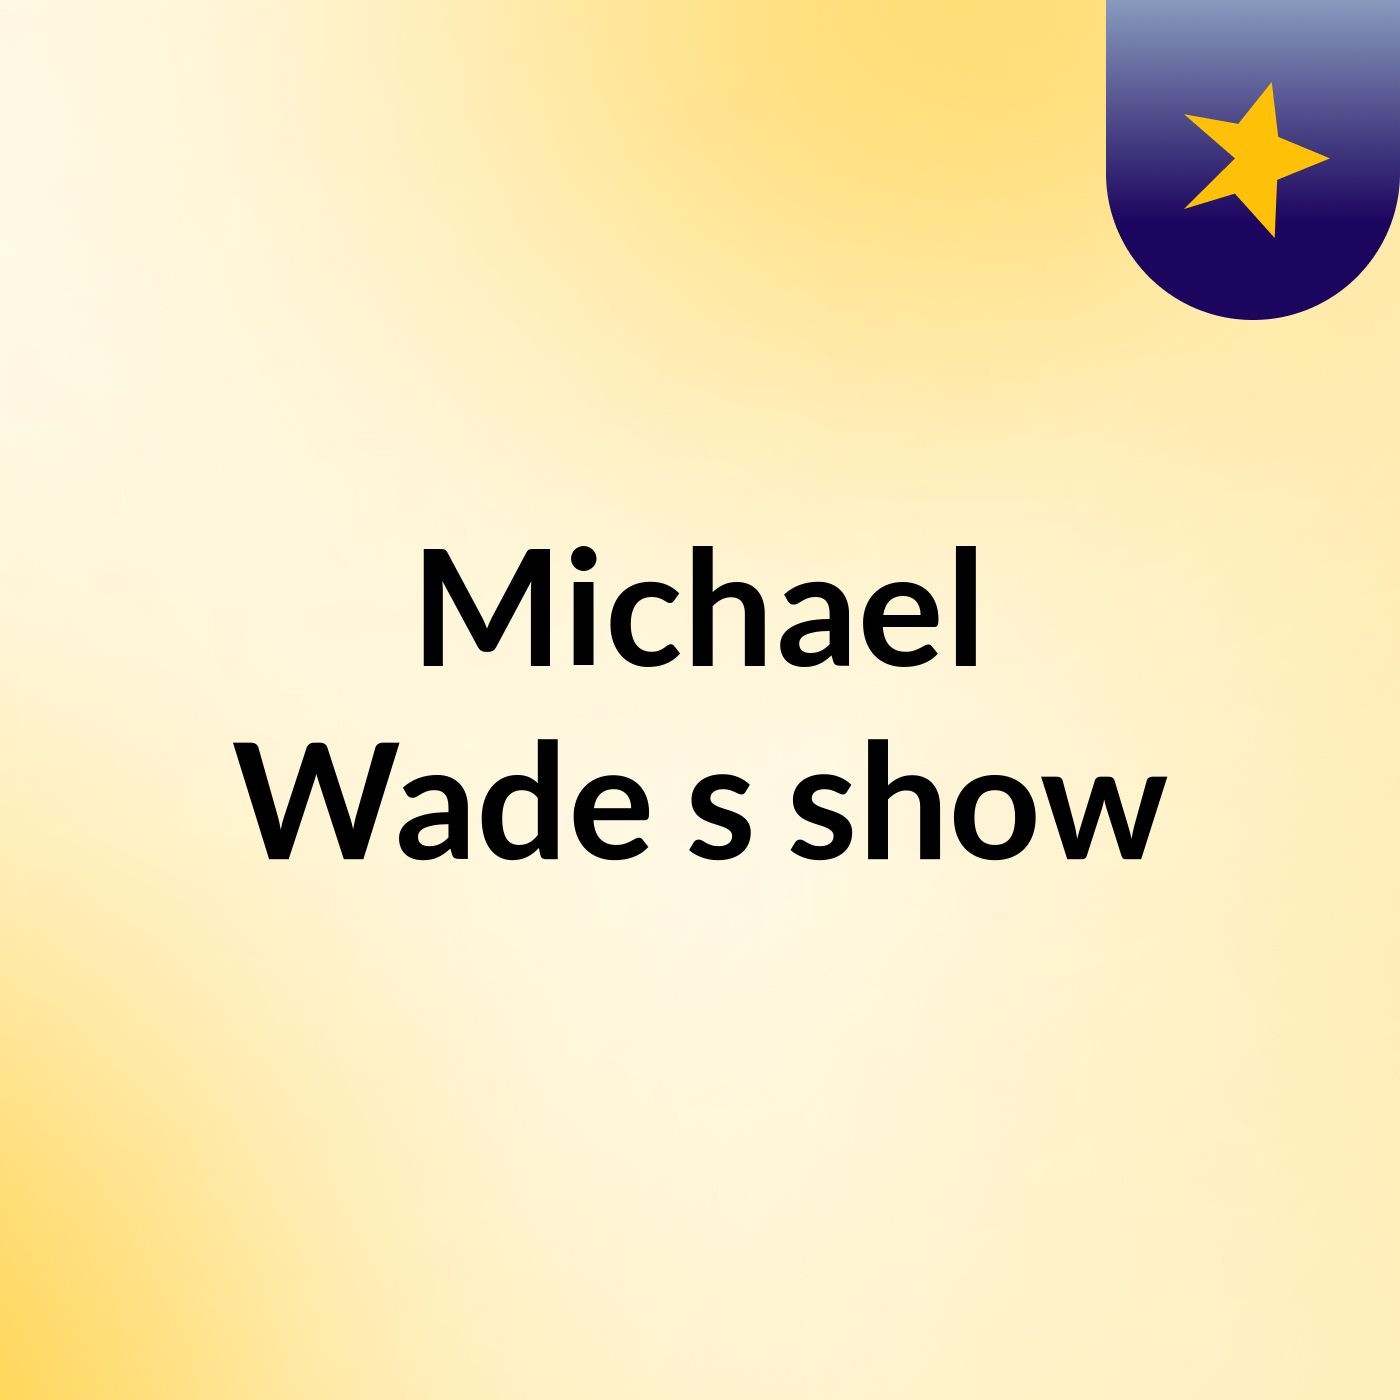 Michael Wade's show